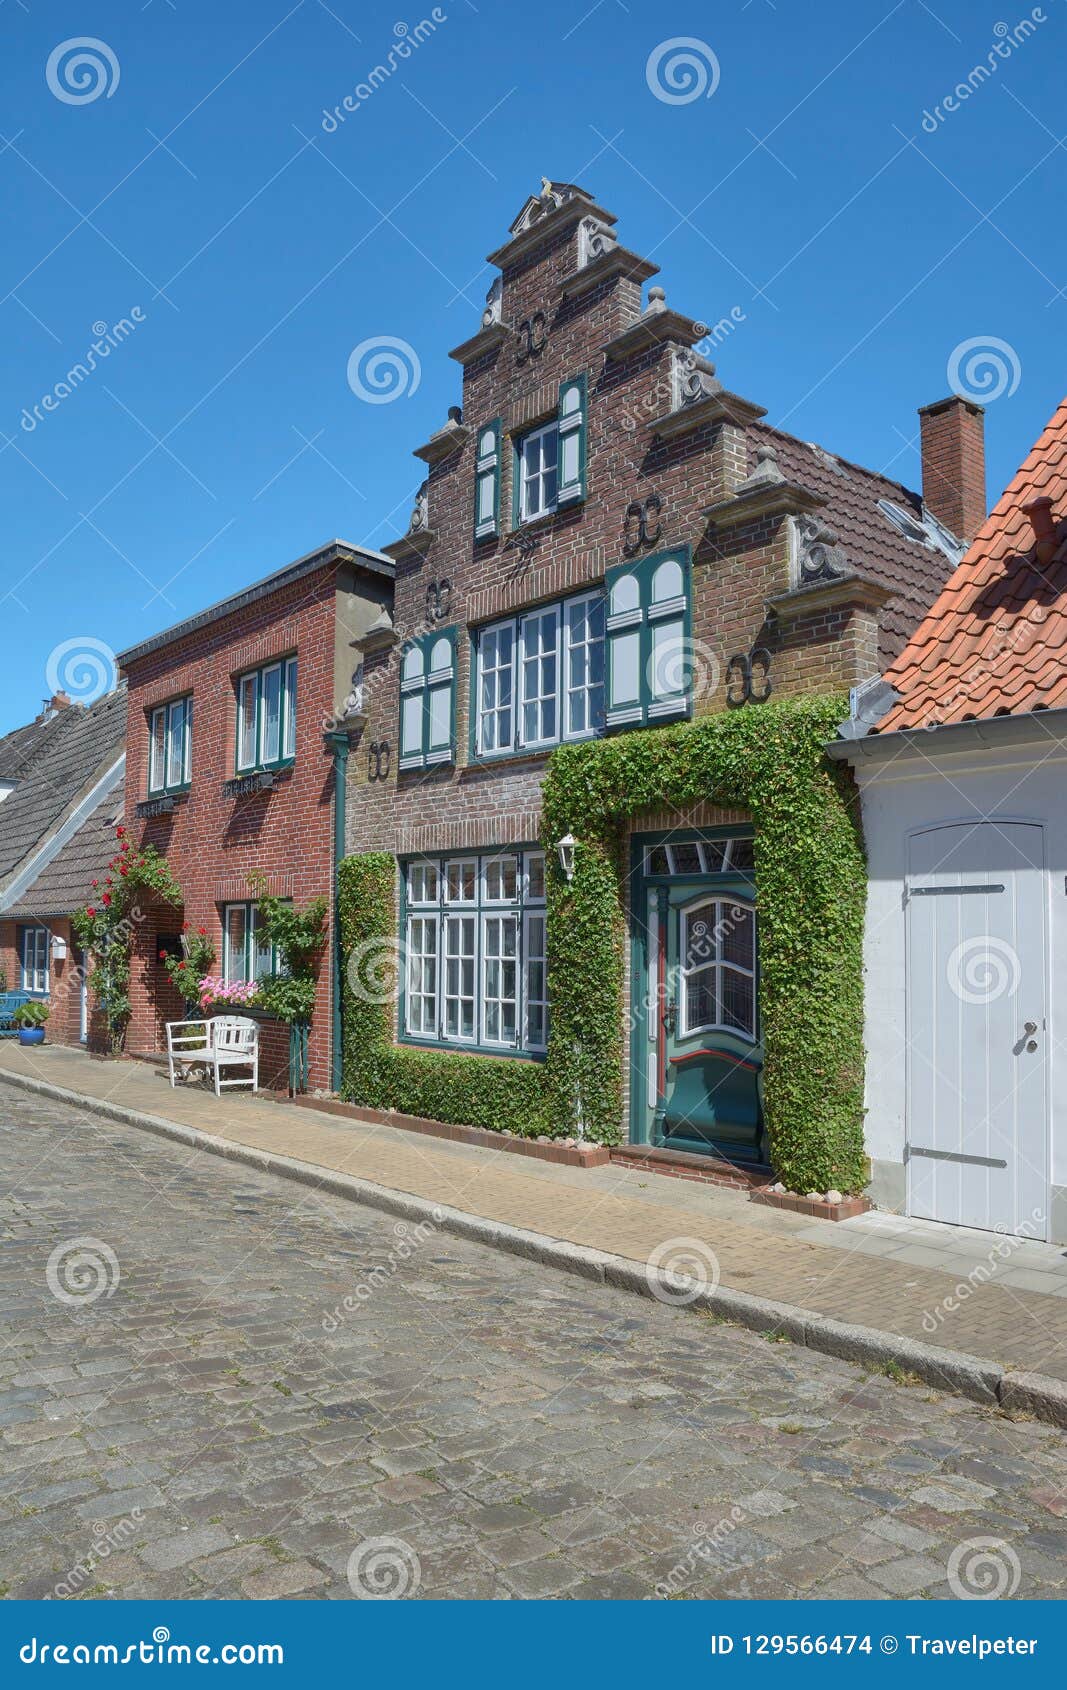 friedrichstadt,treene,north frisia,germany